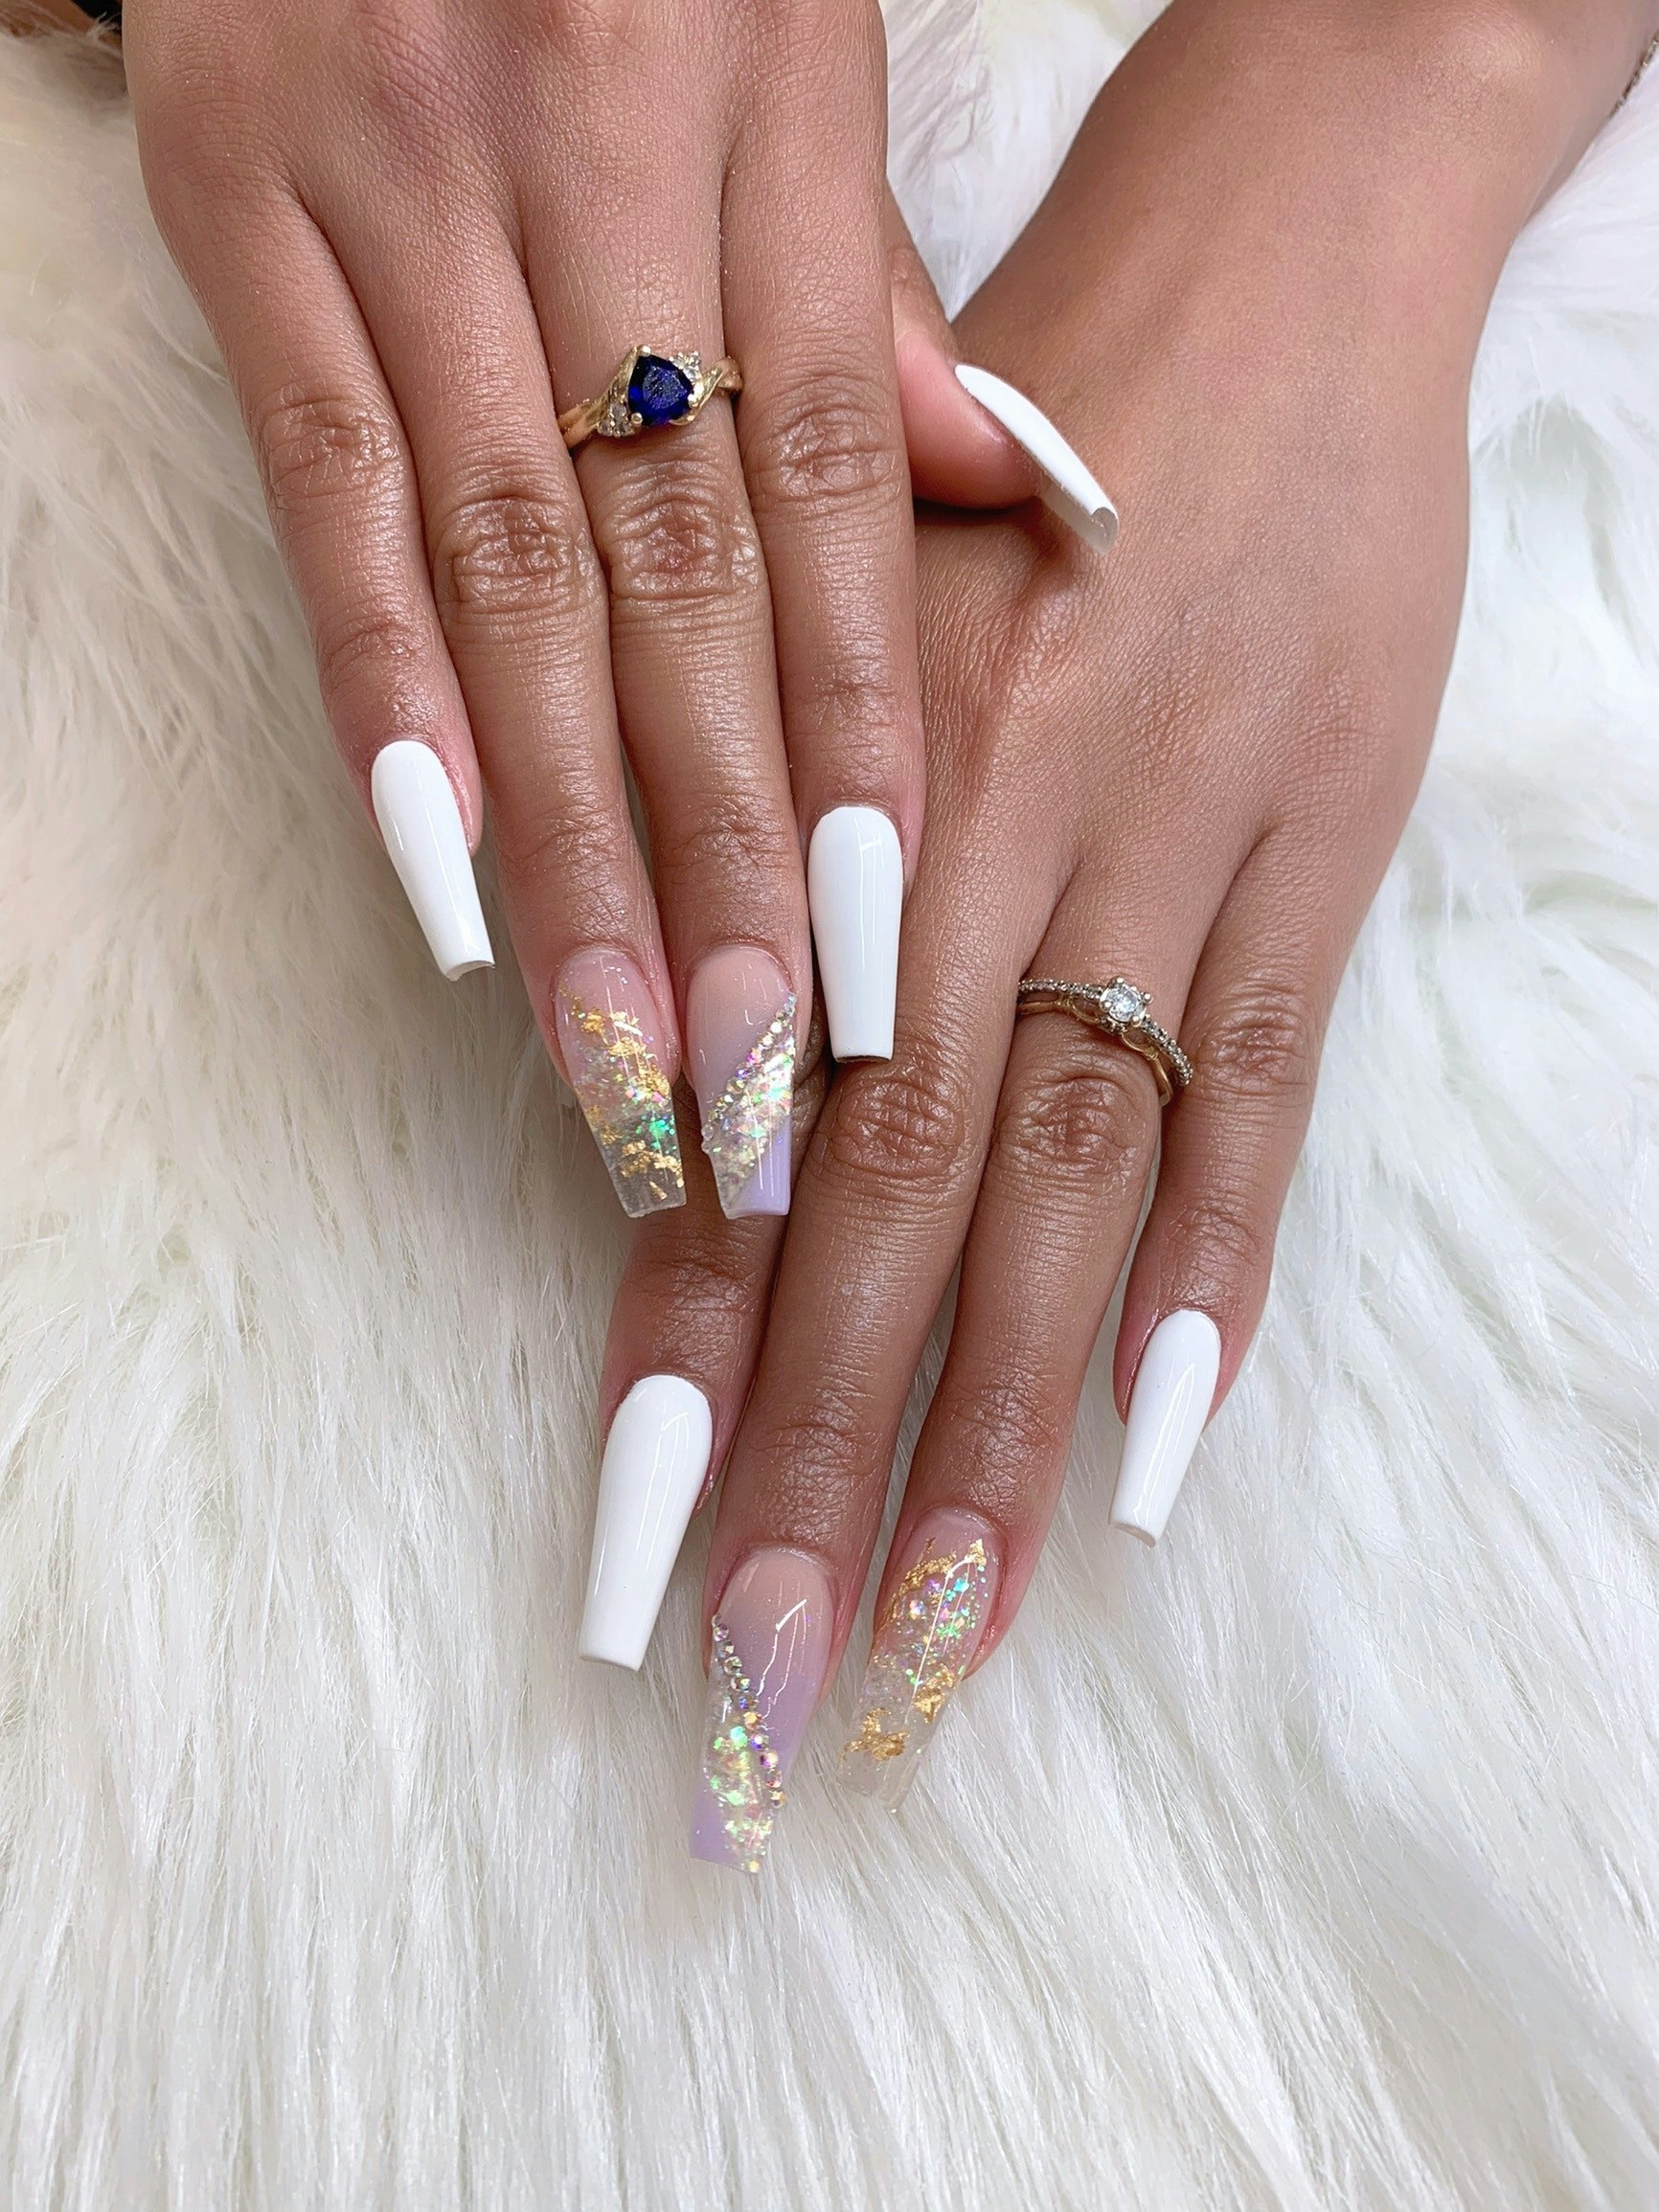 The best glitter nail art inspiration | HELLO!